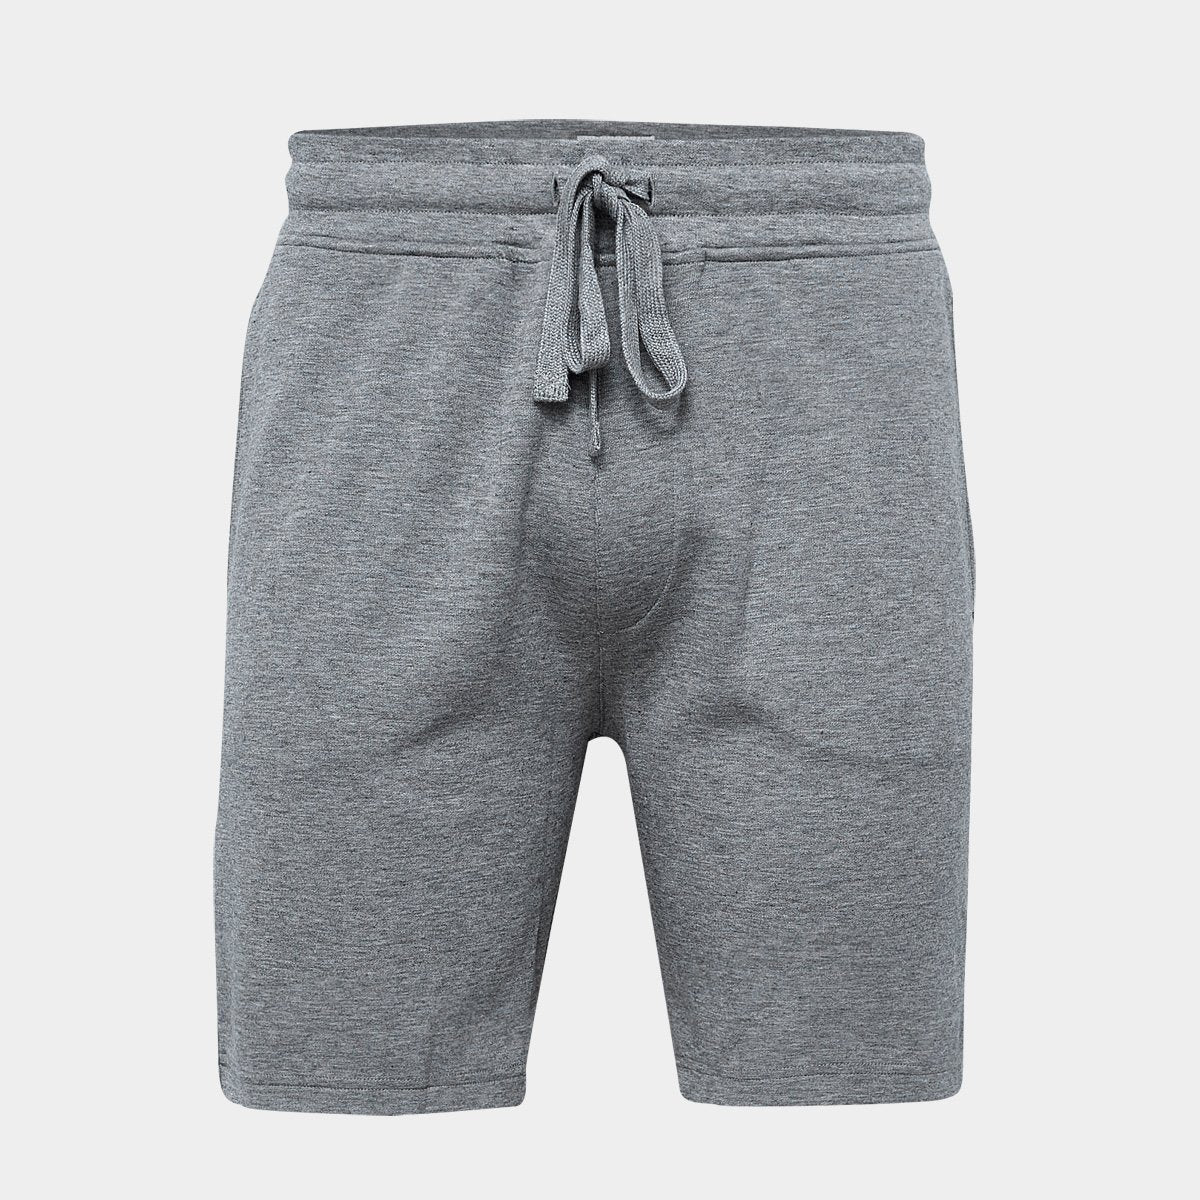 Se Grå shorts i bambus fra JBS of Denmark - Herre sweatshorts i høj kvalitet, XL hos Bambustøj.dk